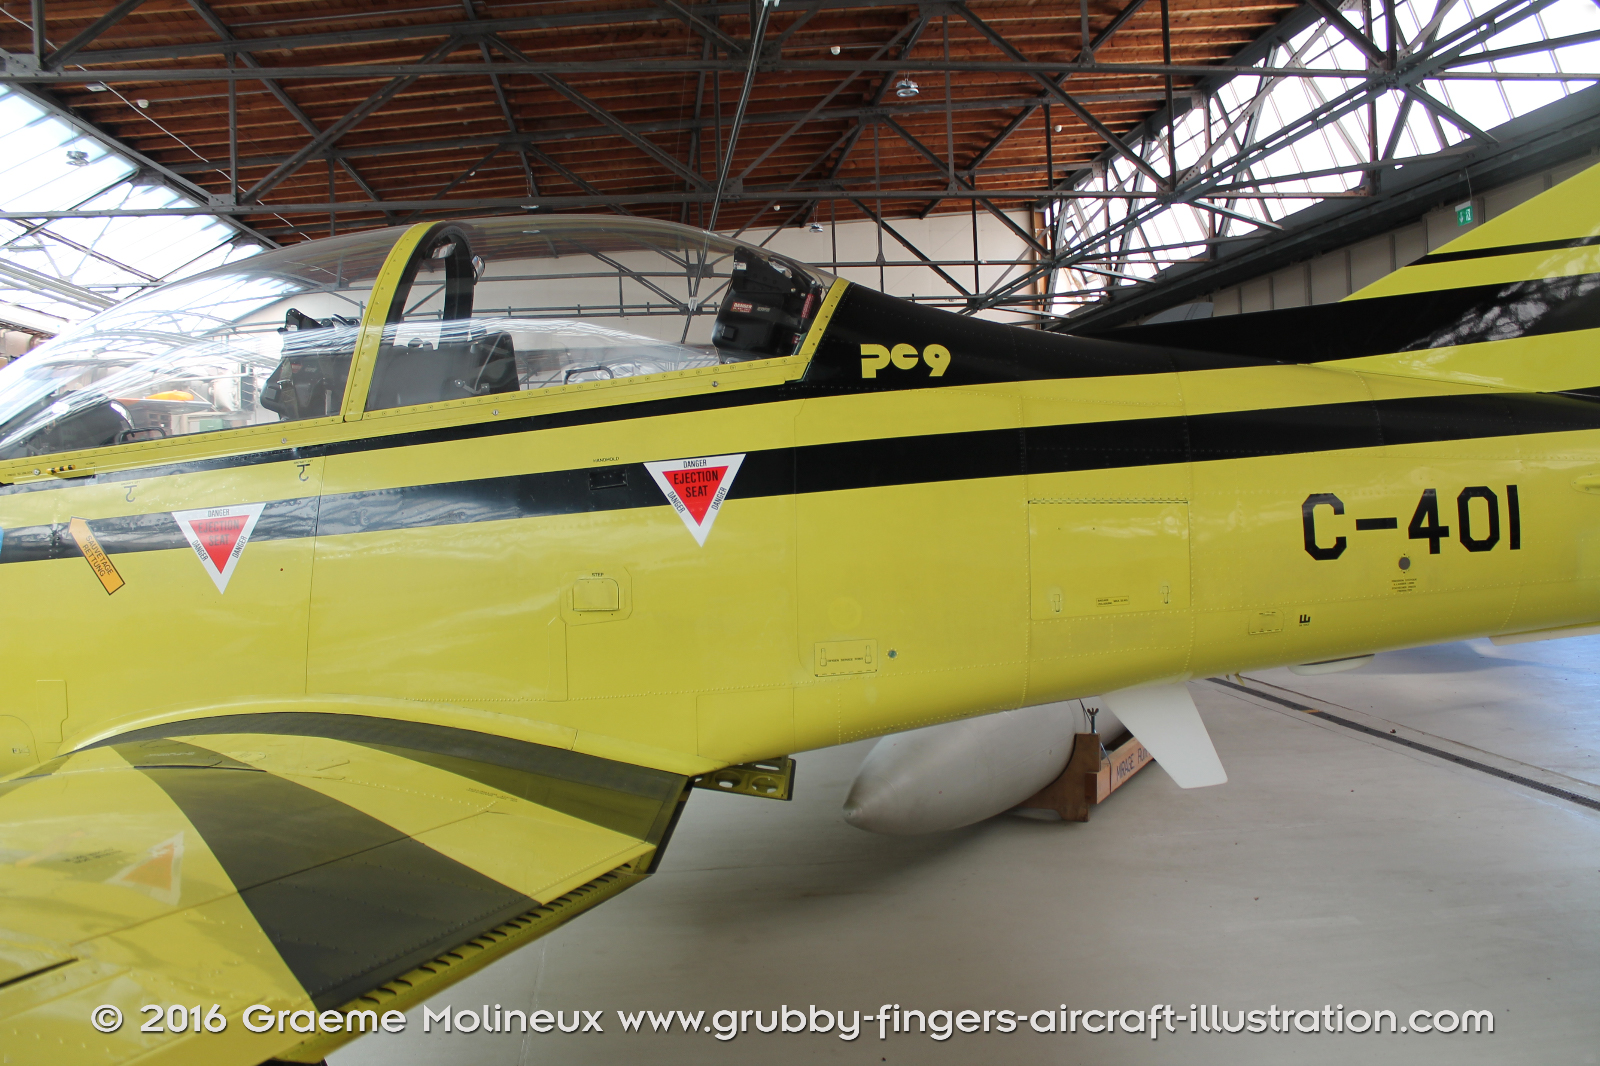 PILATUS_PC-9_C-401_Swiss_Air_Force_Museum_2015_08_GrubbyFingers